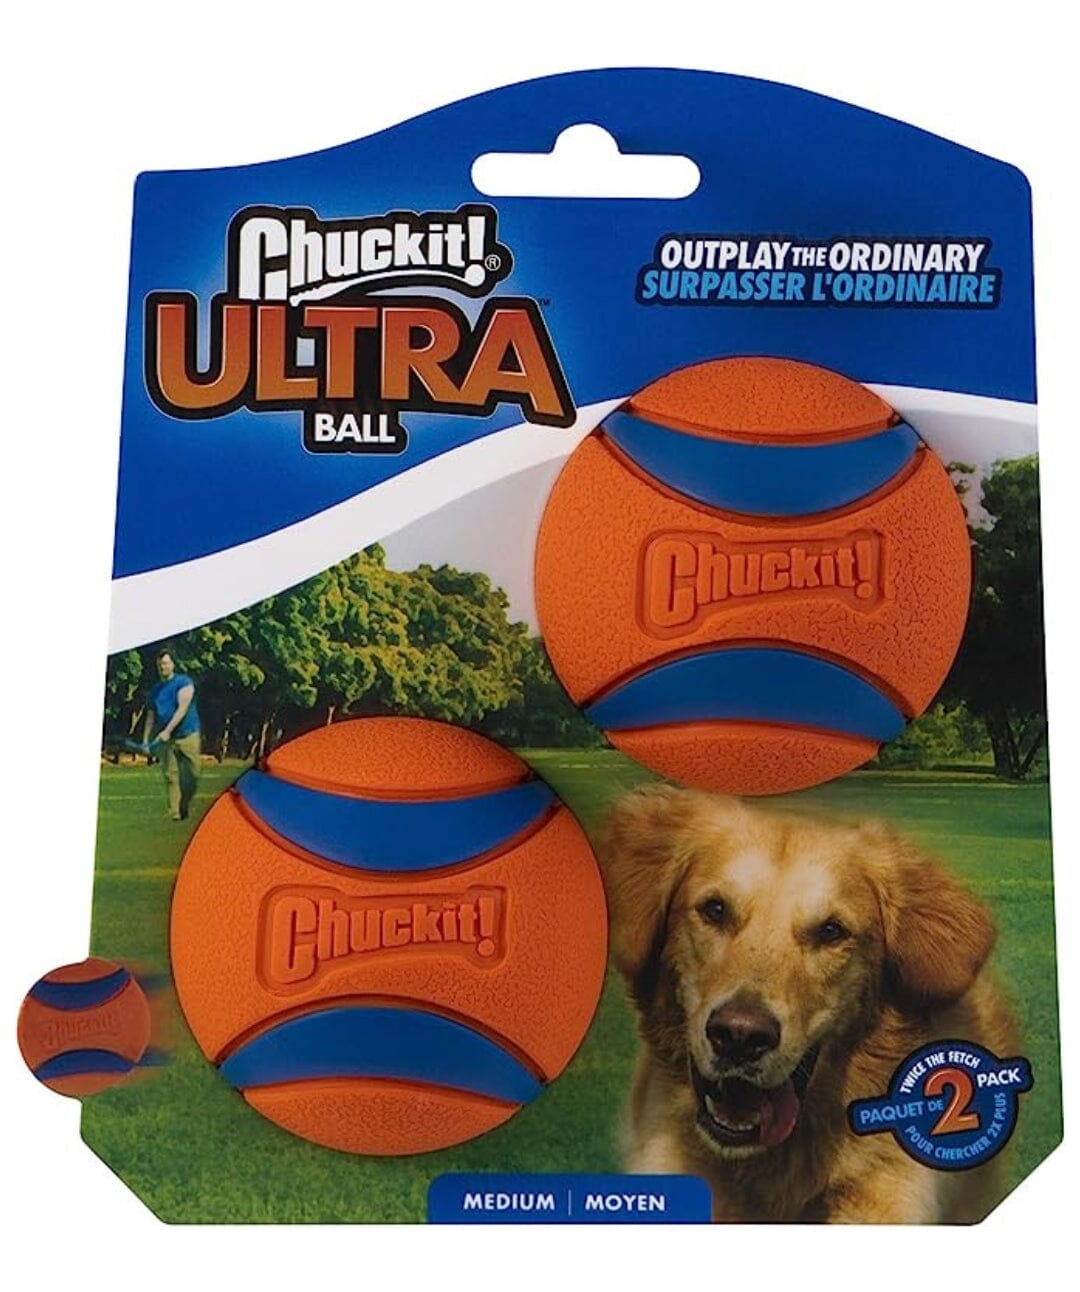 Chuckit! Medium Ultra Ball Dog Toy - Set of 2 Fetch Toys Rover 